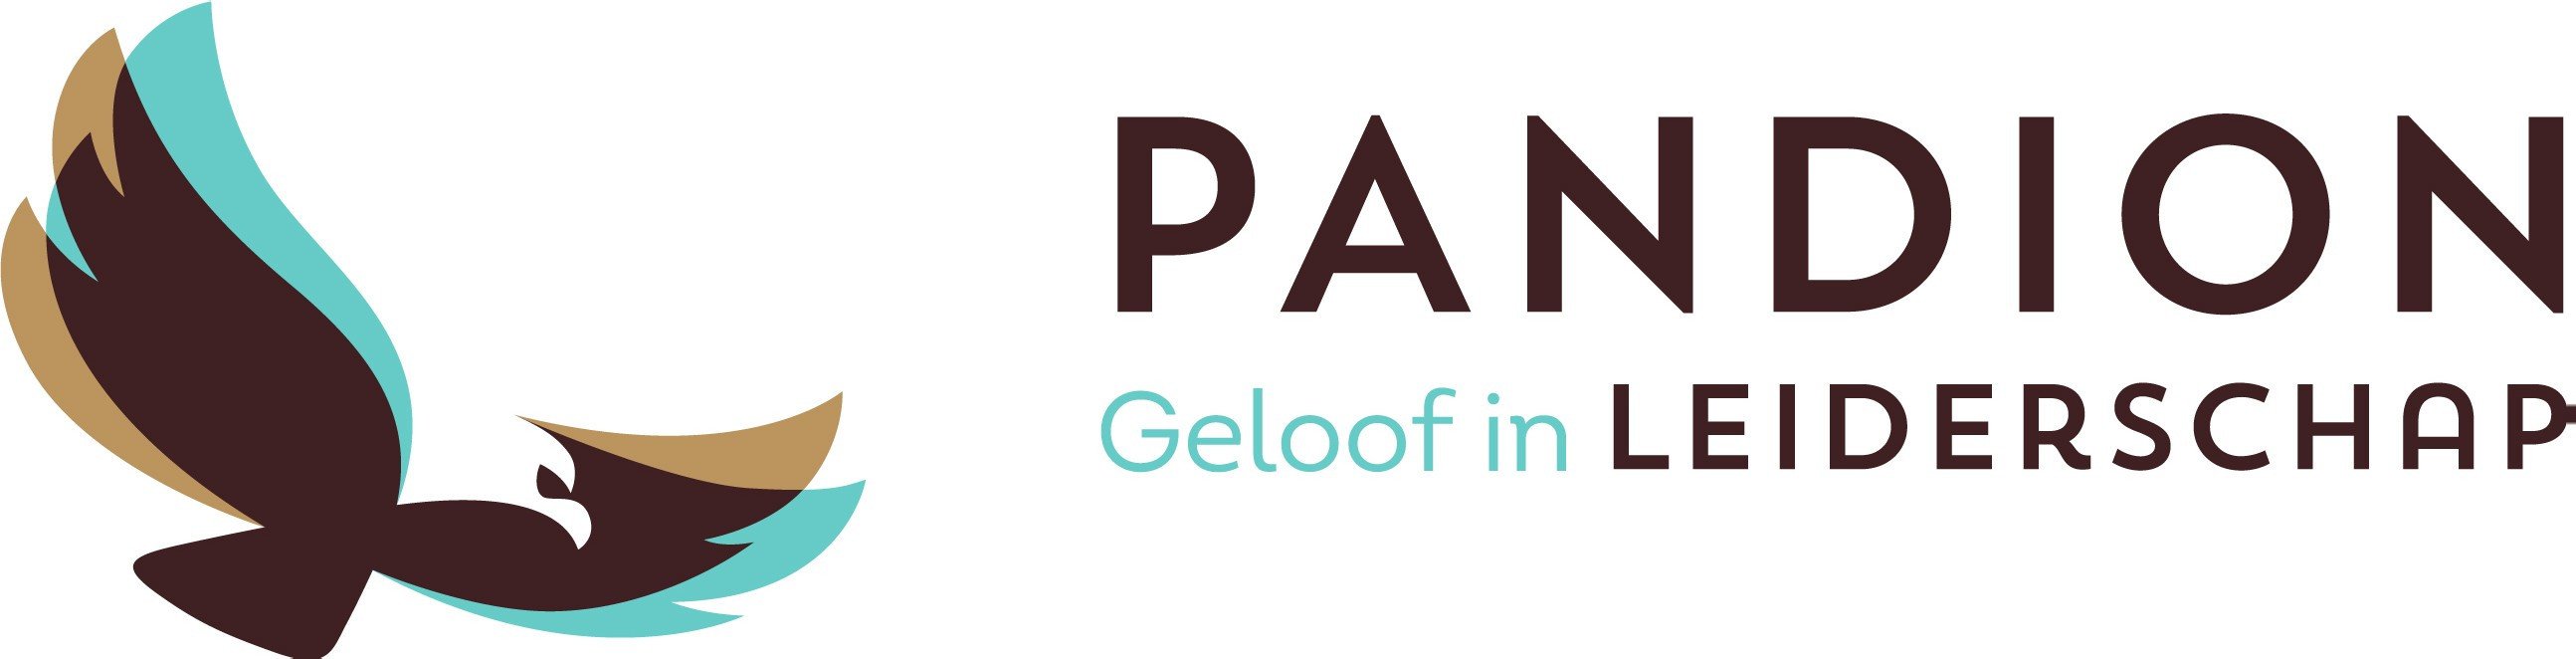 Pandion-logo-Jobfish-2.jpeg